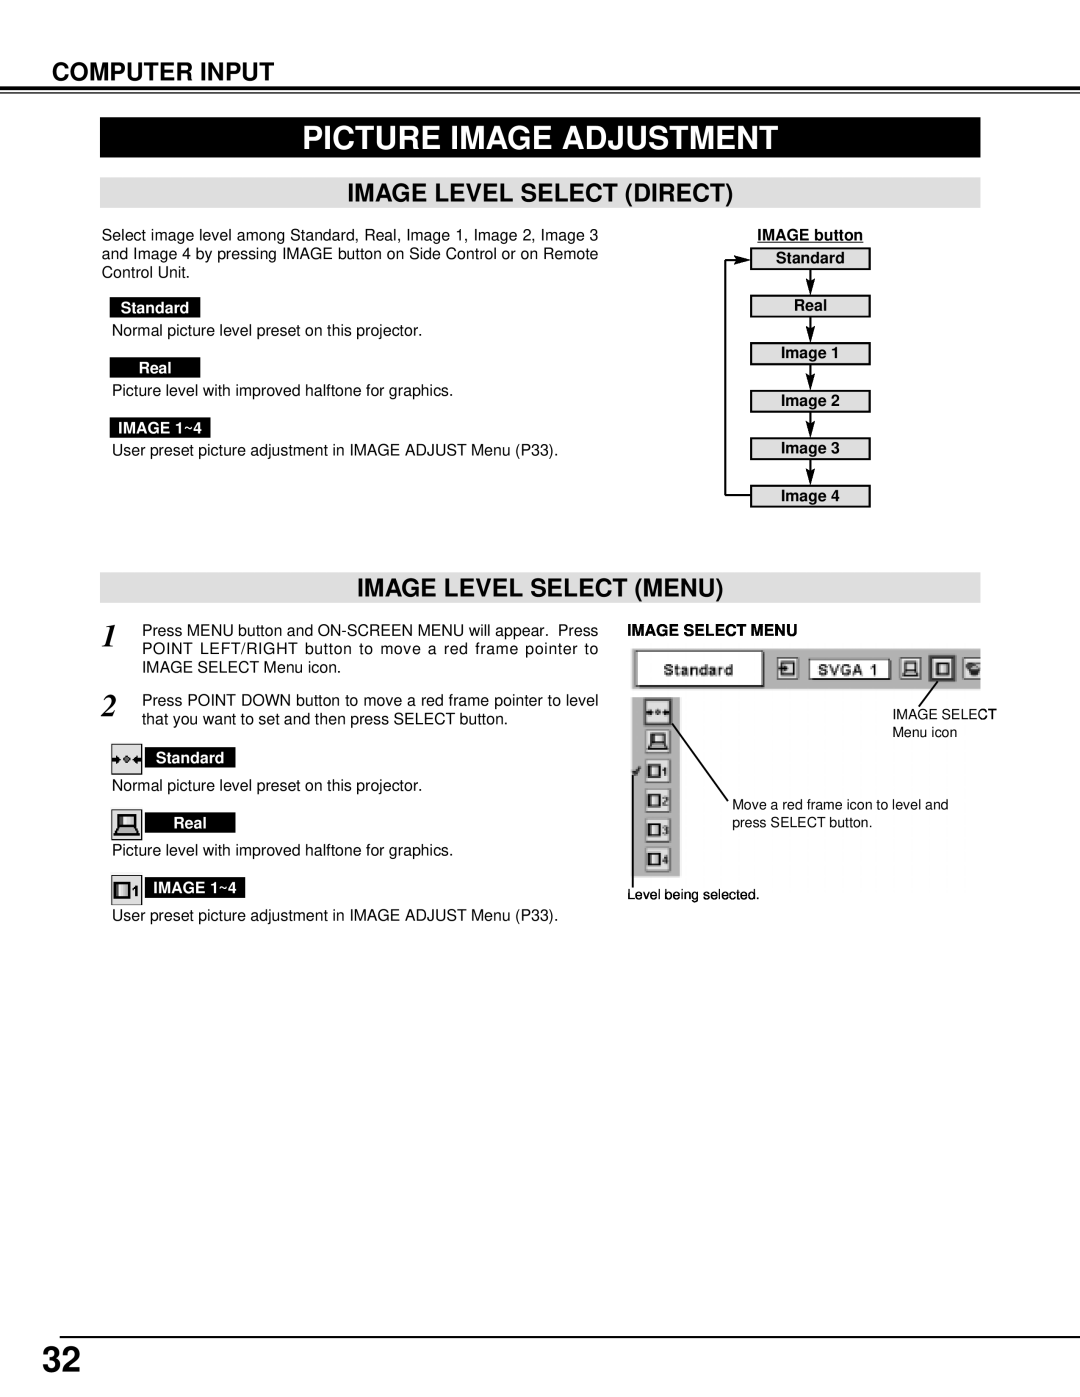 Eiki LC-XT2 instruction manual Picture Image Adjustment, Computer Input, Image Level Select Direct, Image Level Select Menu 